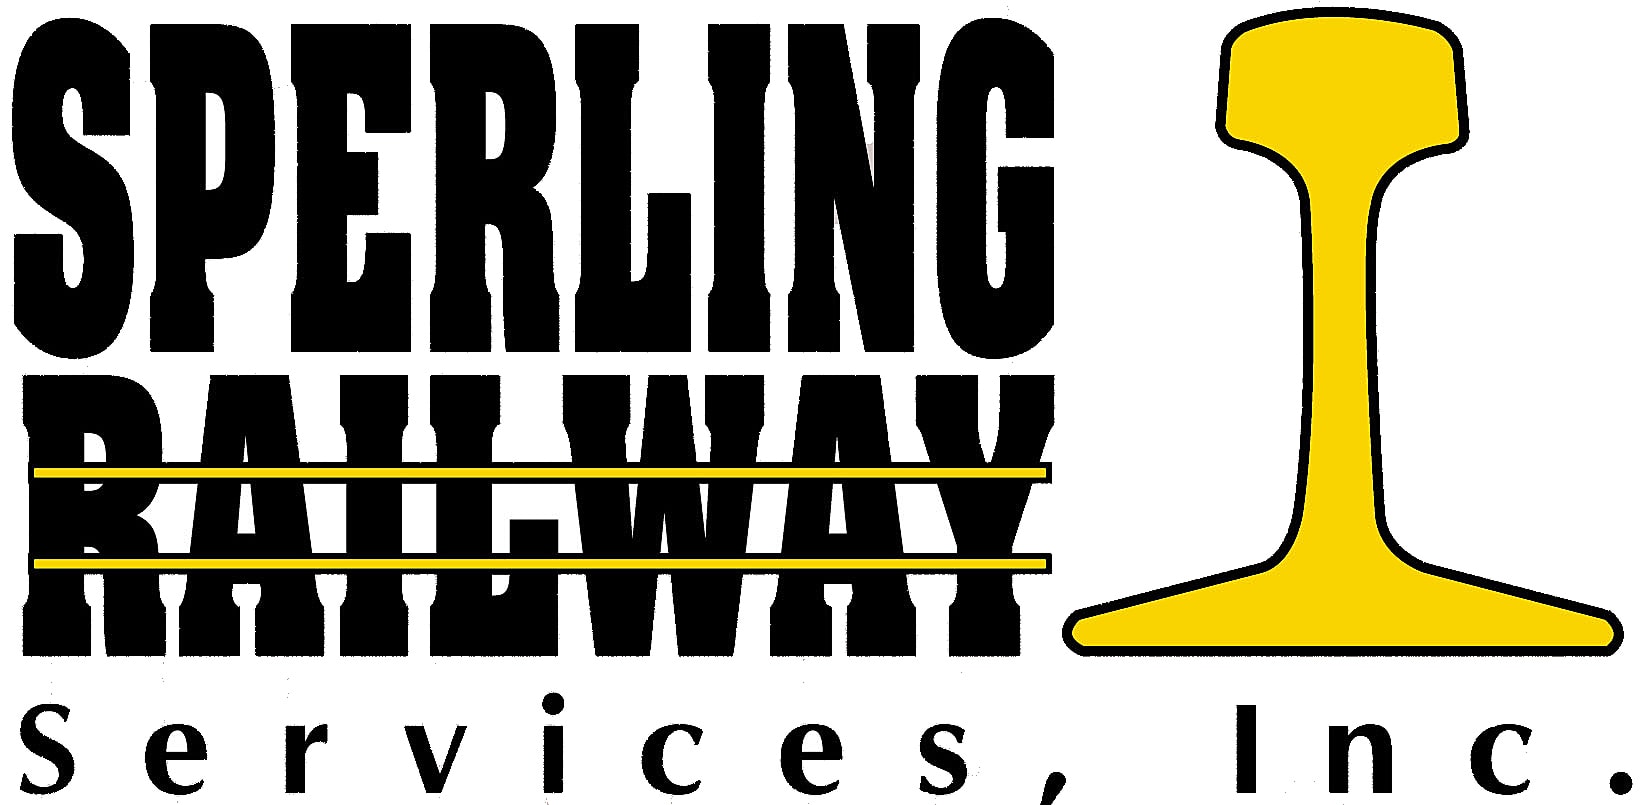 , Sperling Railway Services, Inc. Customer Story